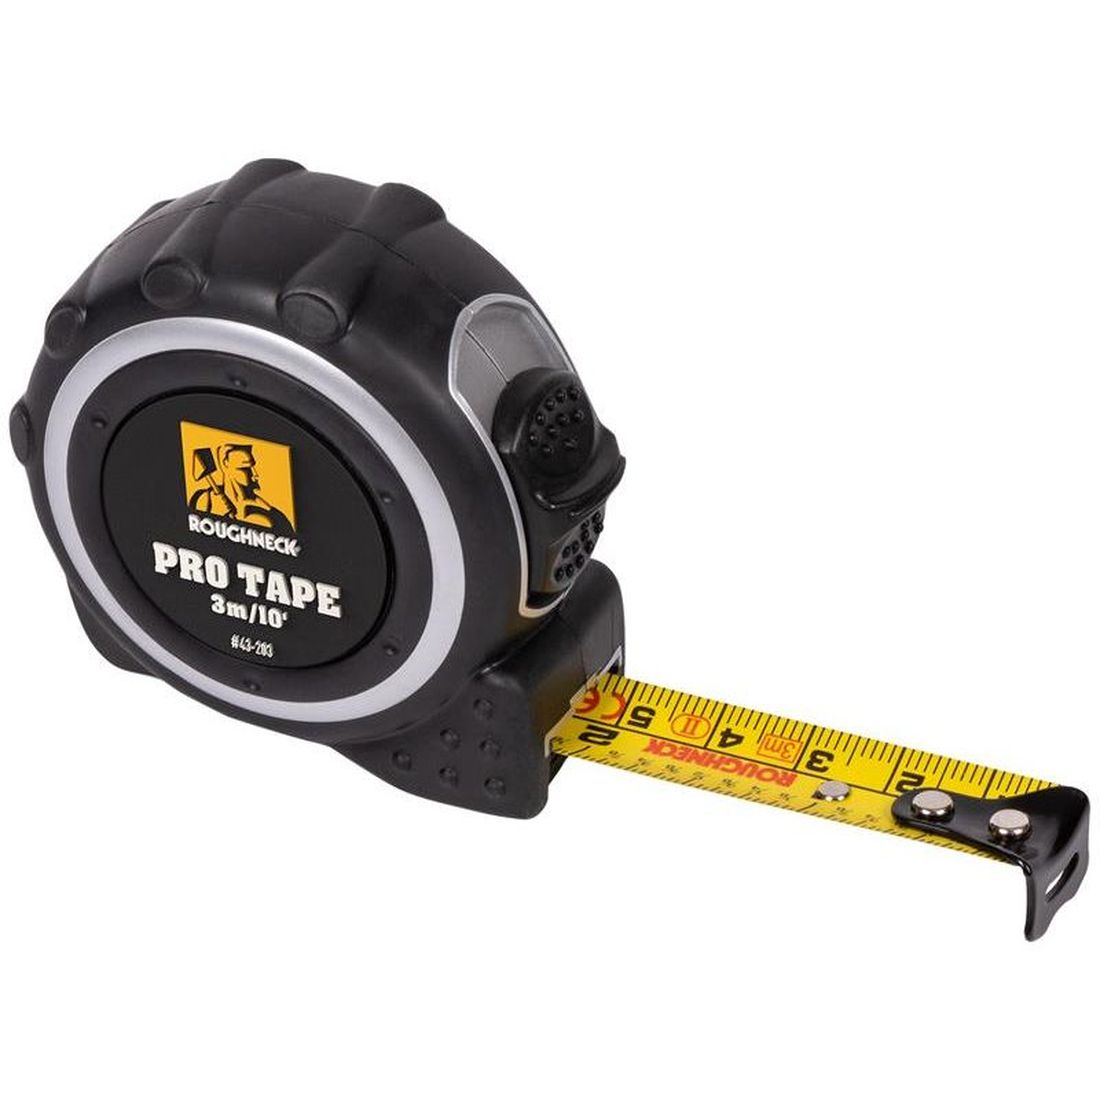 Roughneck E-Z Read Tape Measure 3m/10ft (Width 16mm)                                     